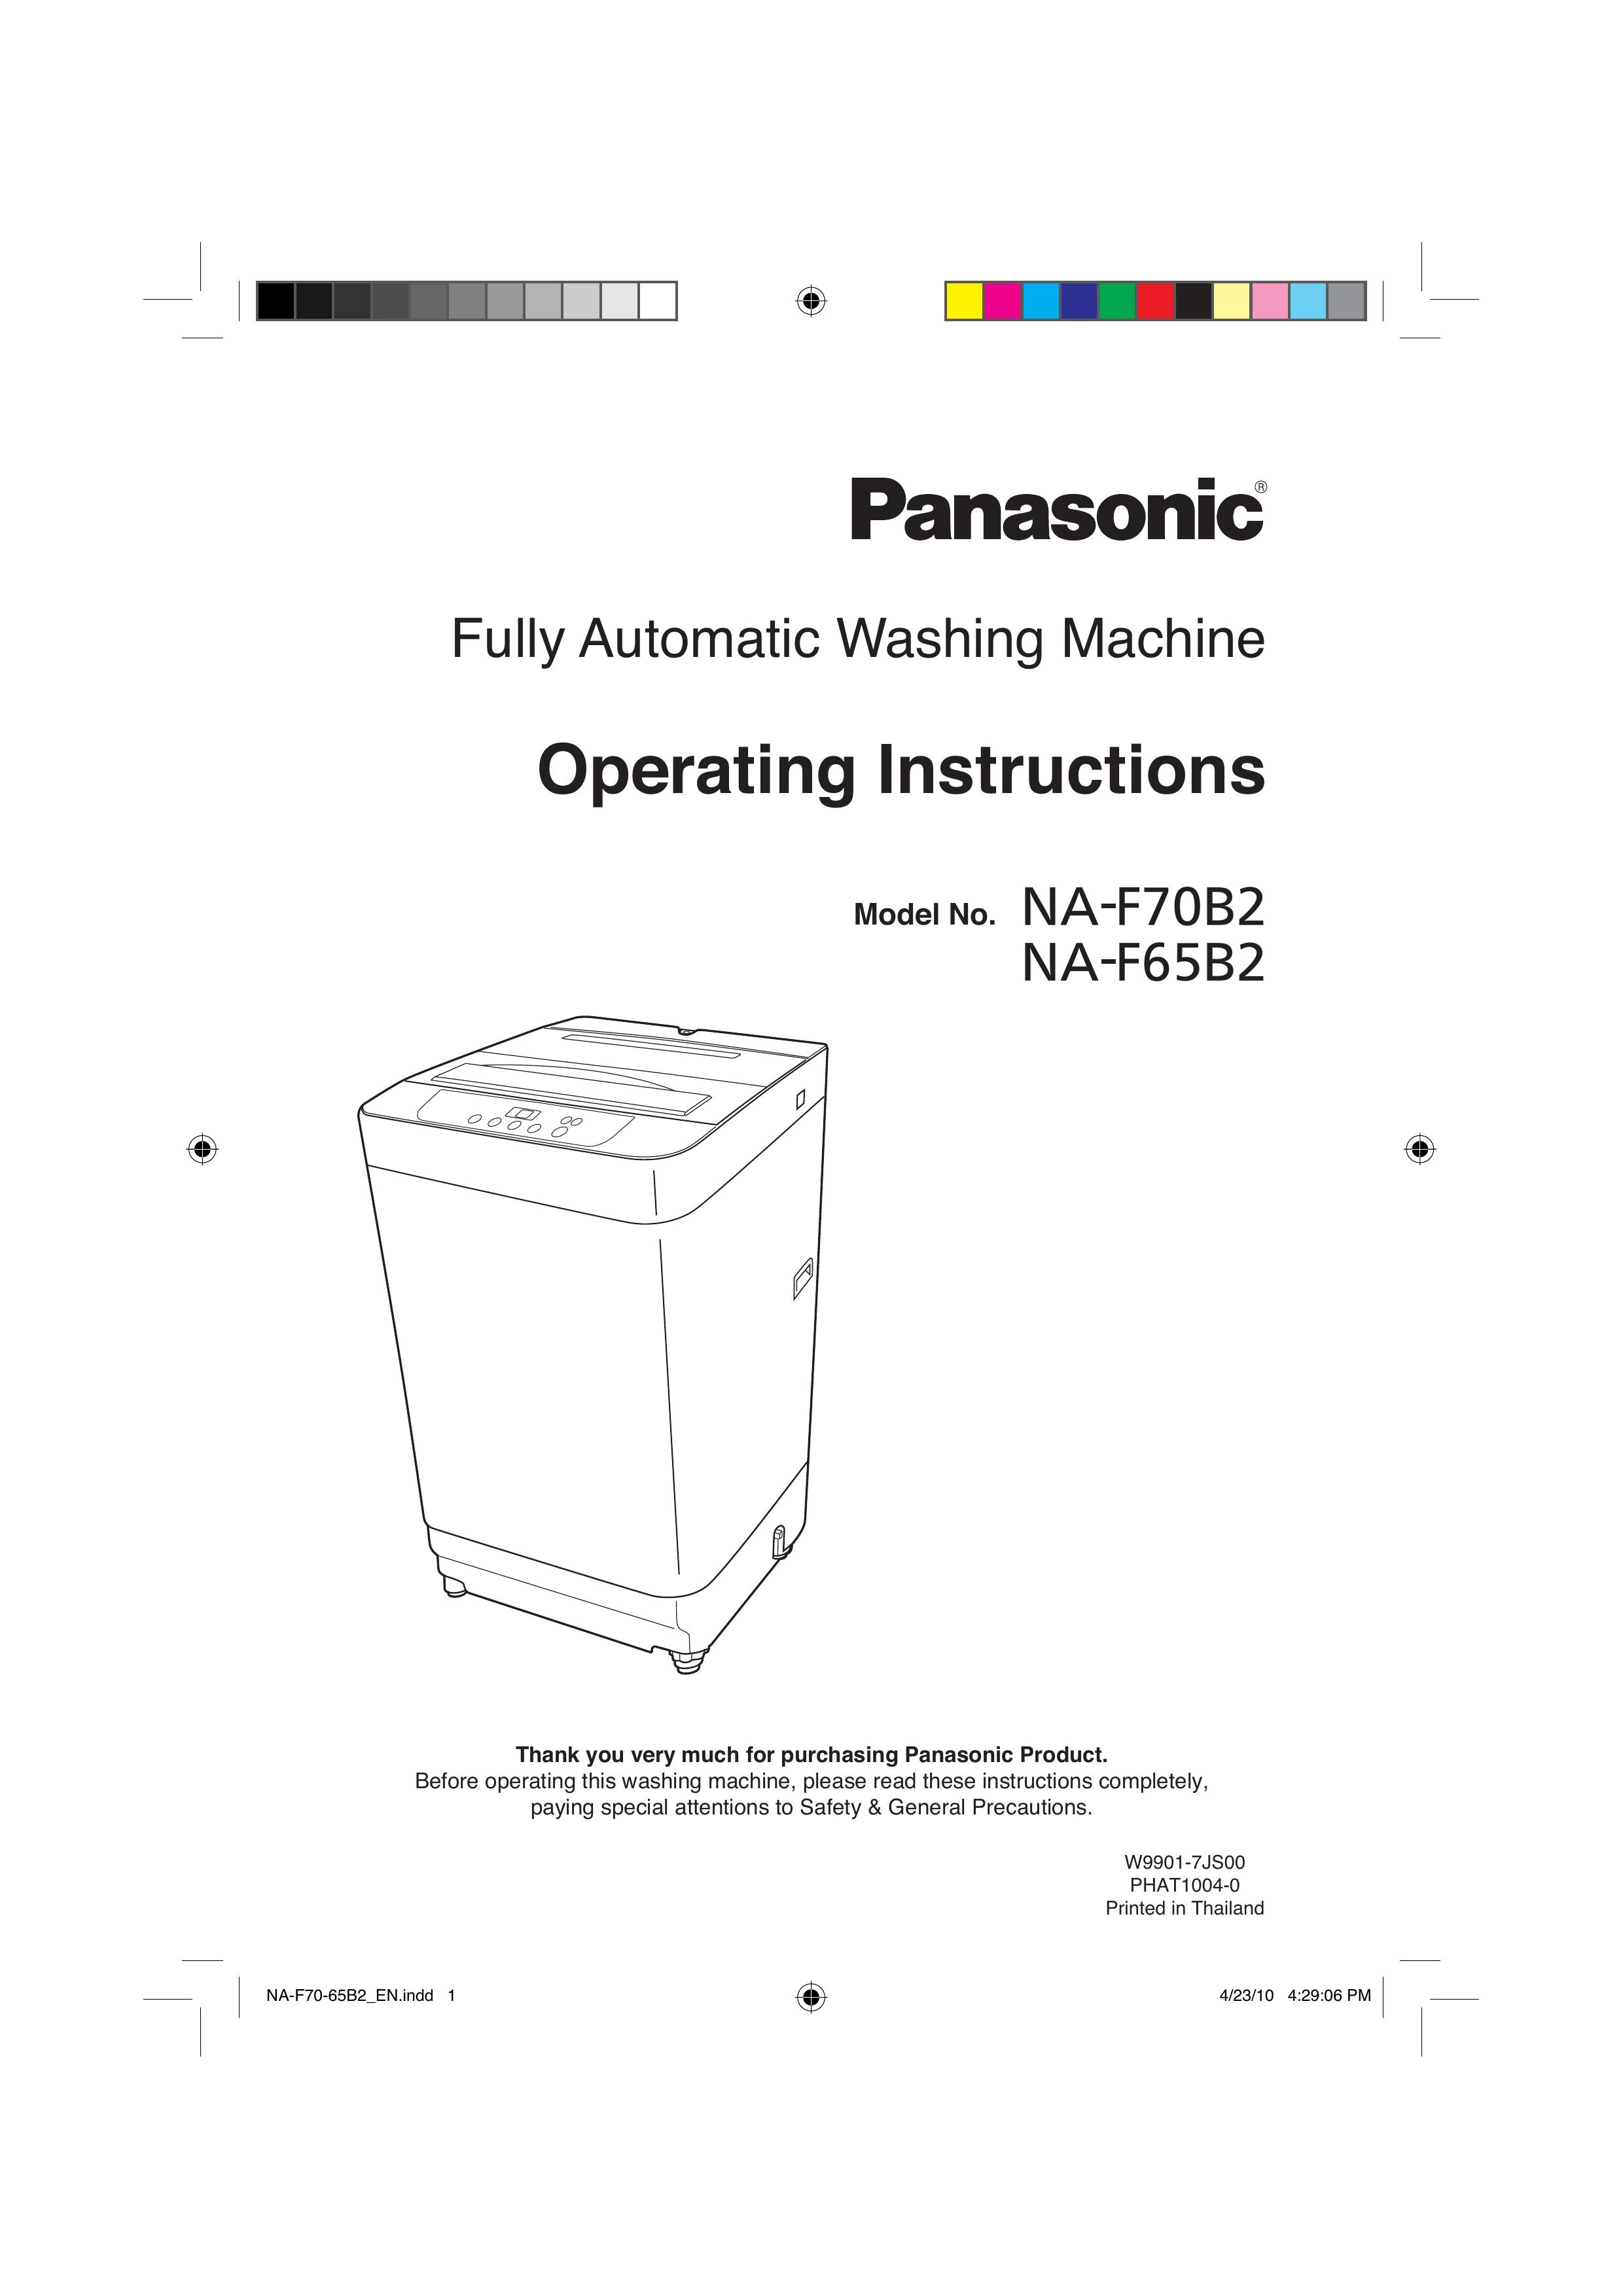 Panasonic NA-F65B2 Washer/Dryer User Manual